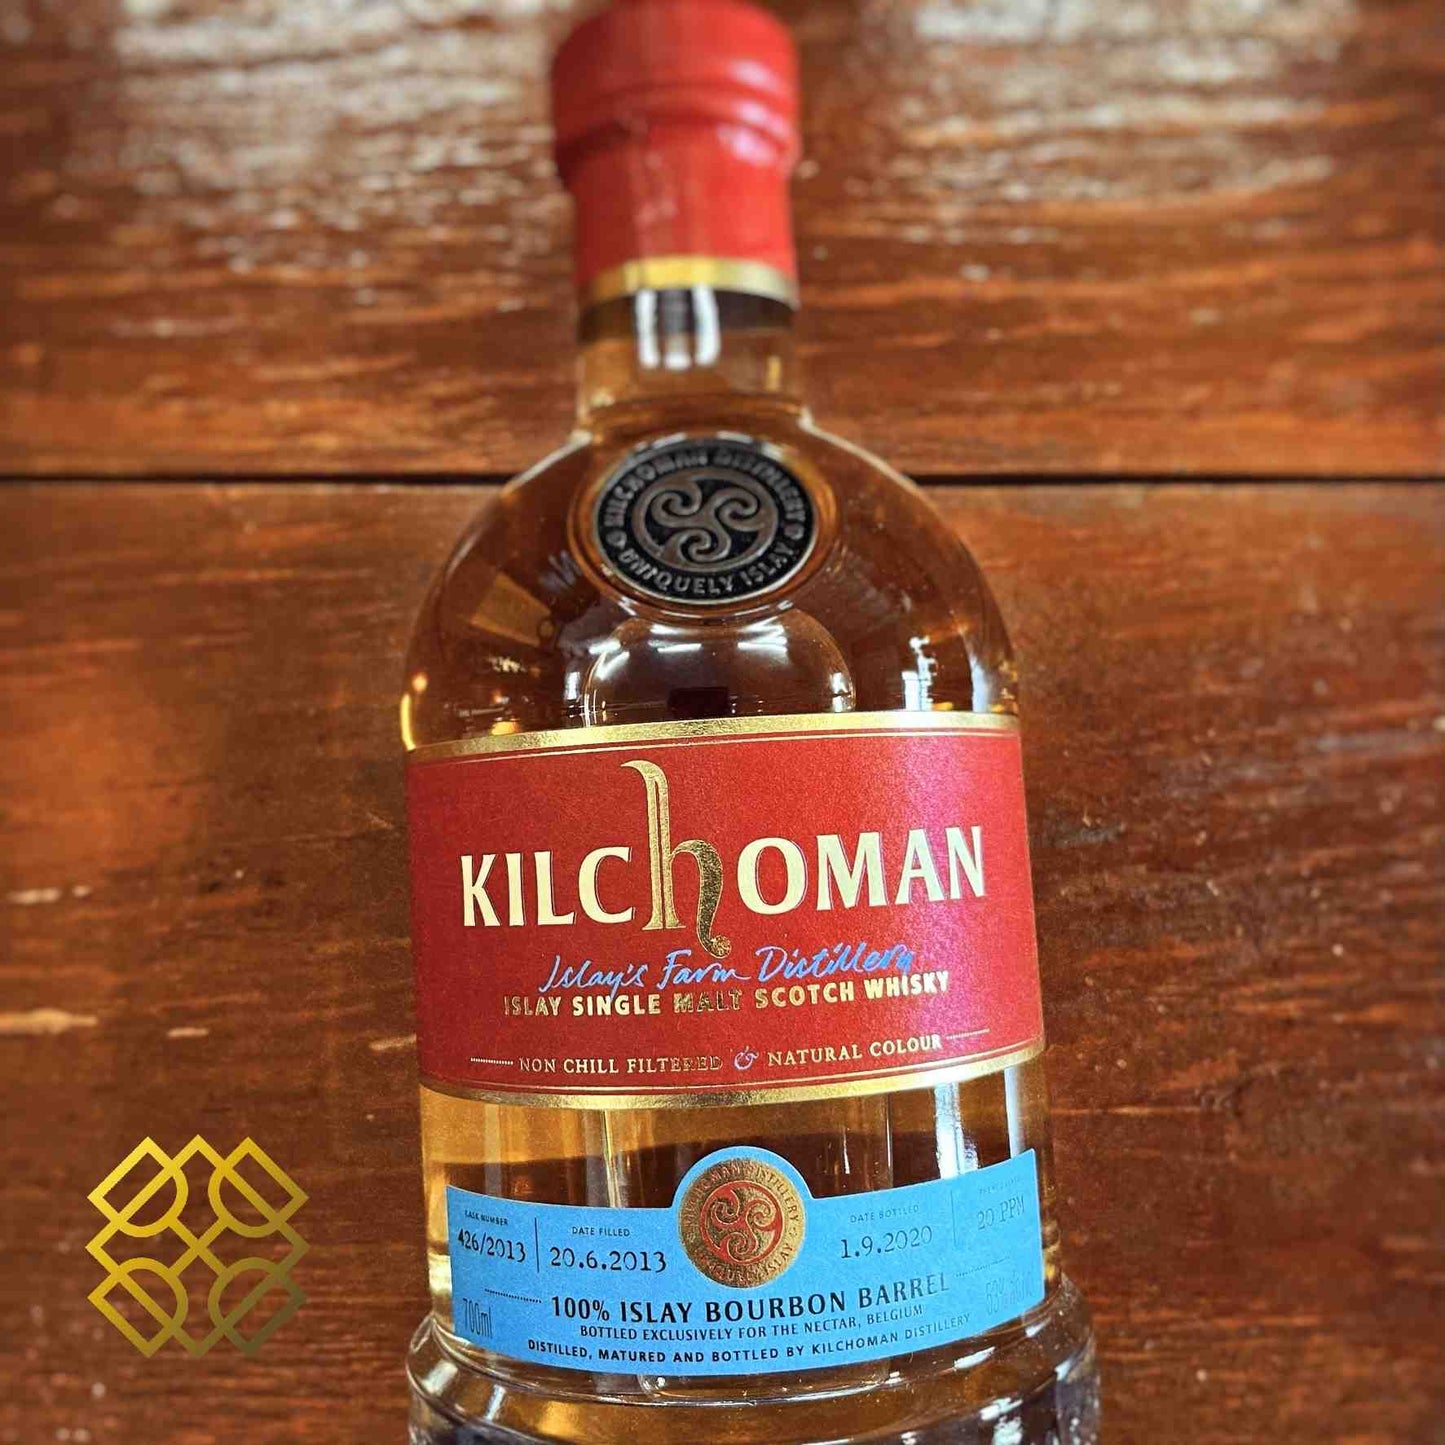 Kilchoman - 2013/2020, Bourbon Barrel, 53% Type : Single malt whisky